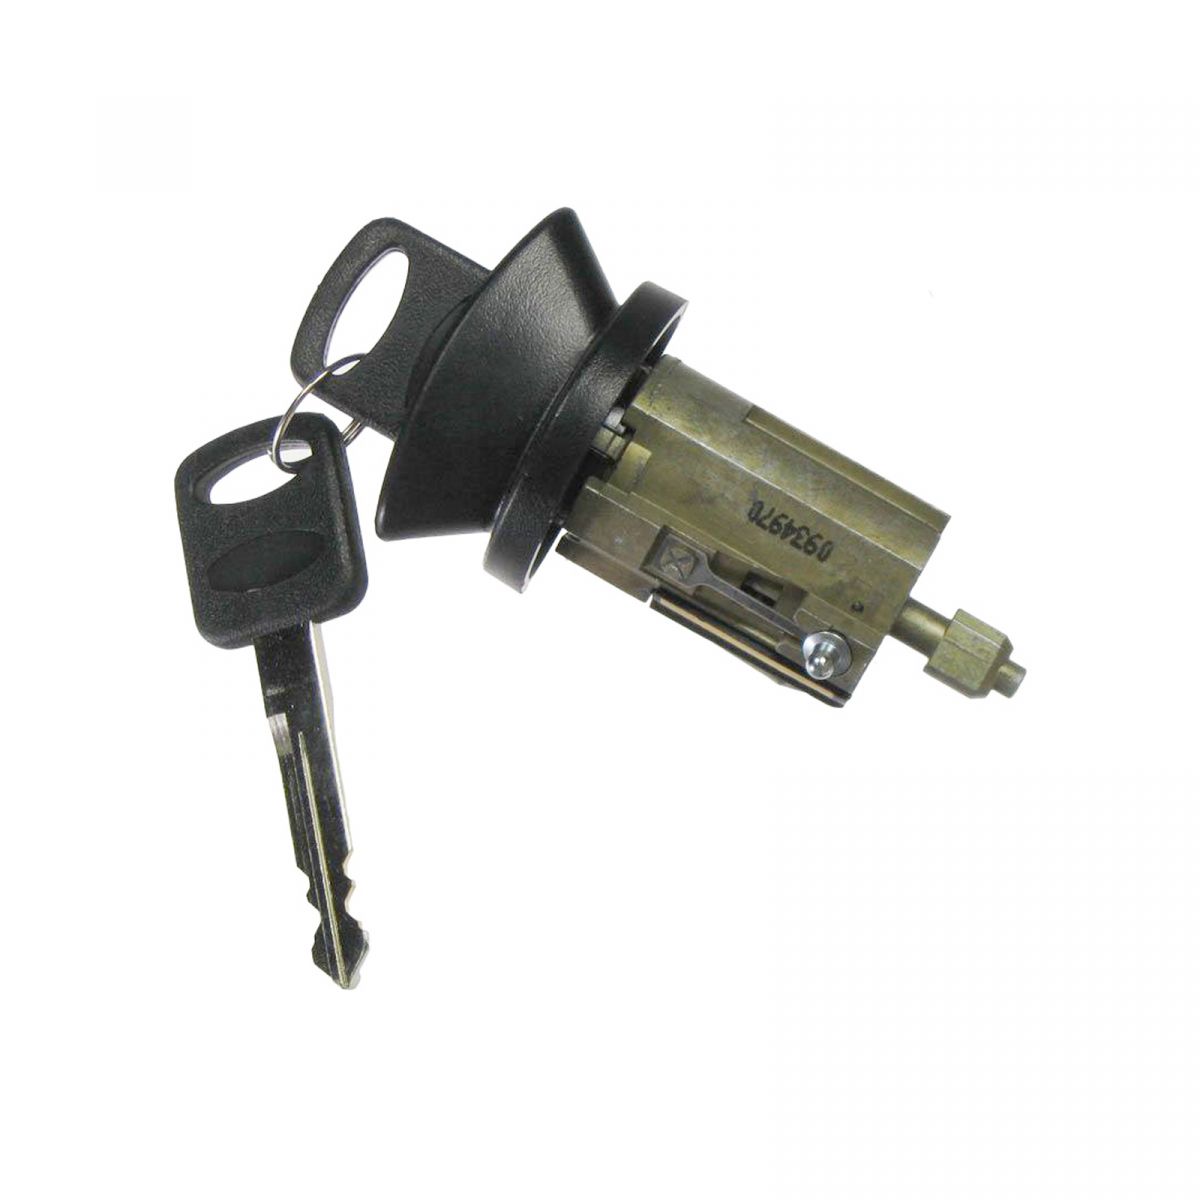 Black Bezel Ignition Lock Cylinder w/ Key for Ford Mercury Lincoln Pickup Truck | eBay 2006 Ford F150 Locked Keys In Truck